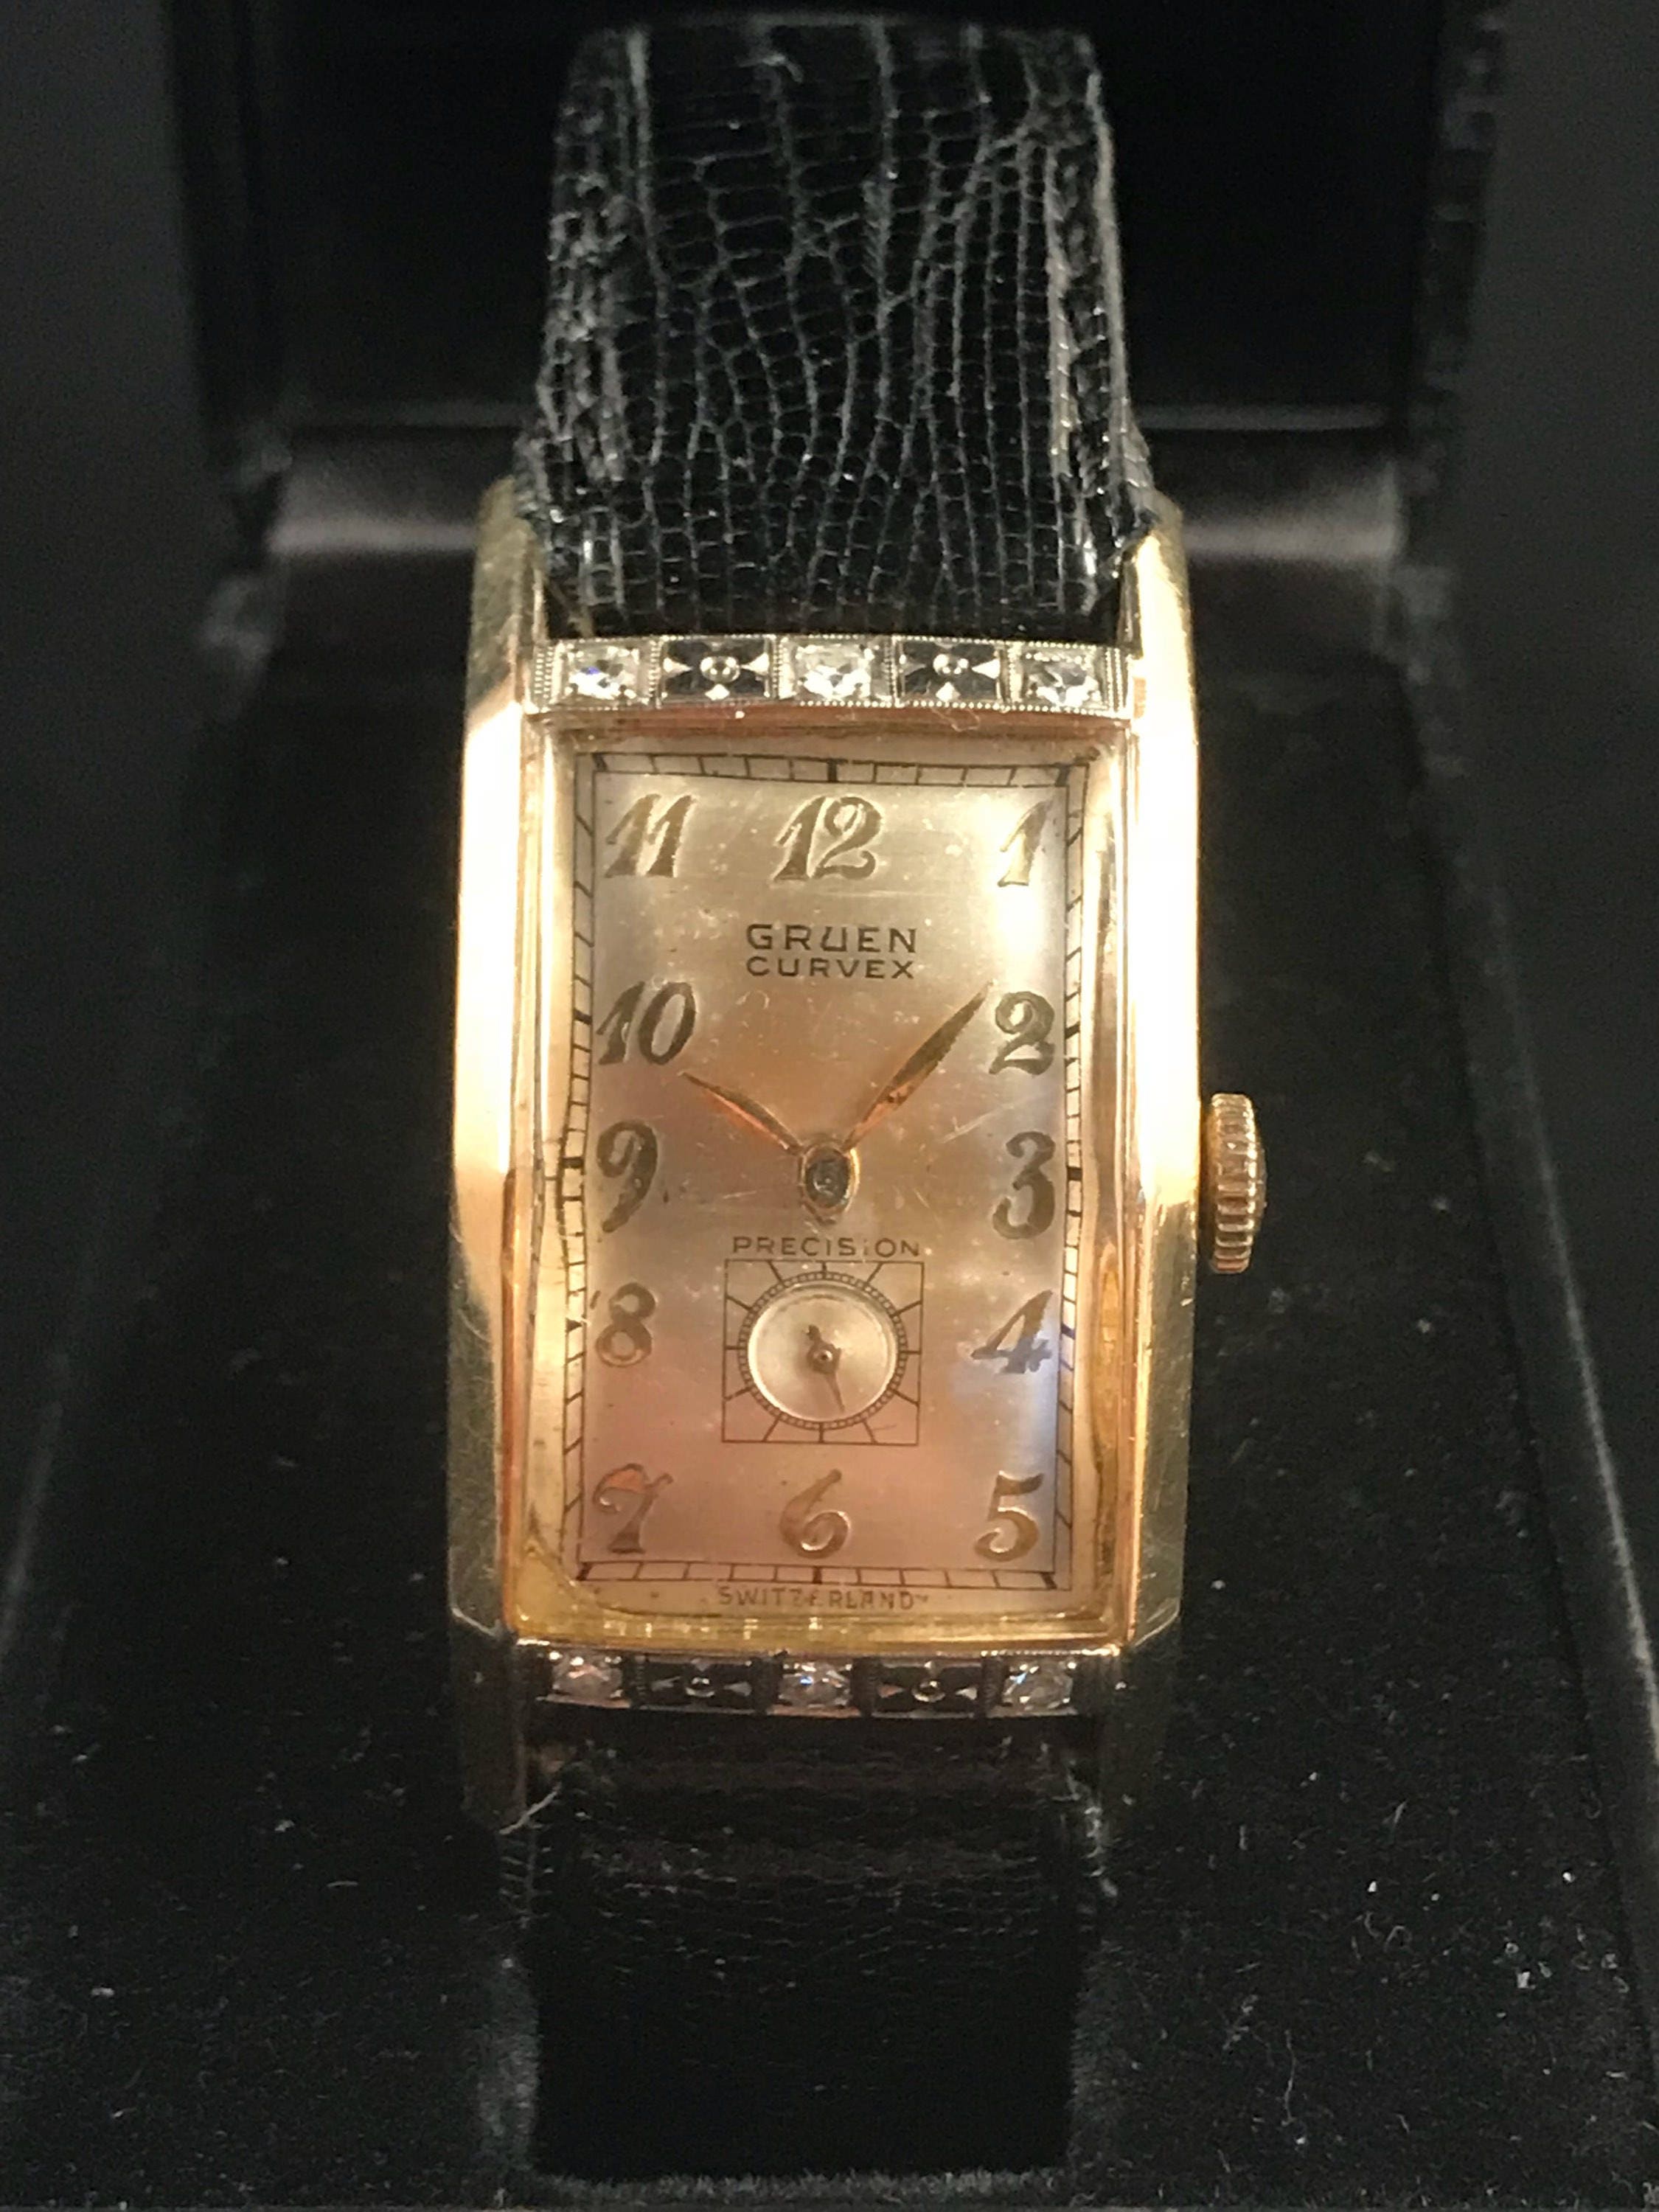 Vintage Gruen Curvex Precision Watch with Diamonds | Etsy